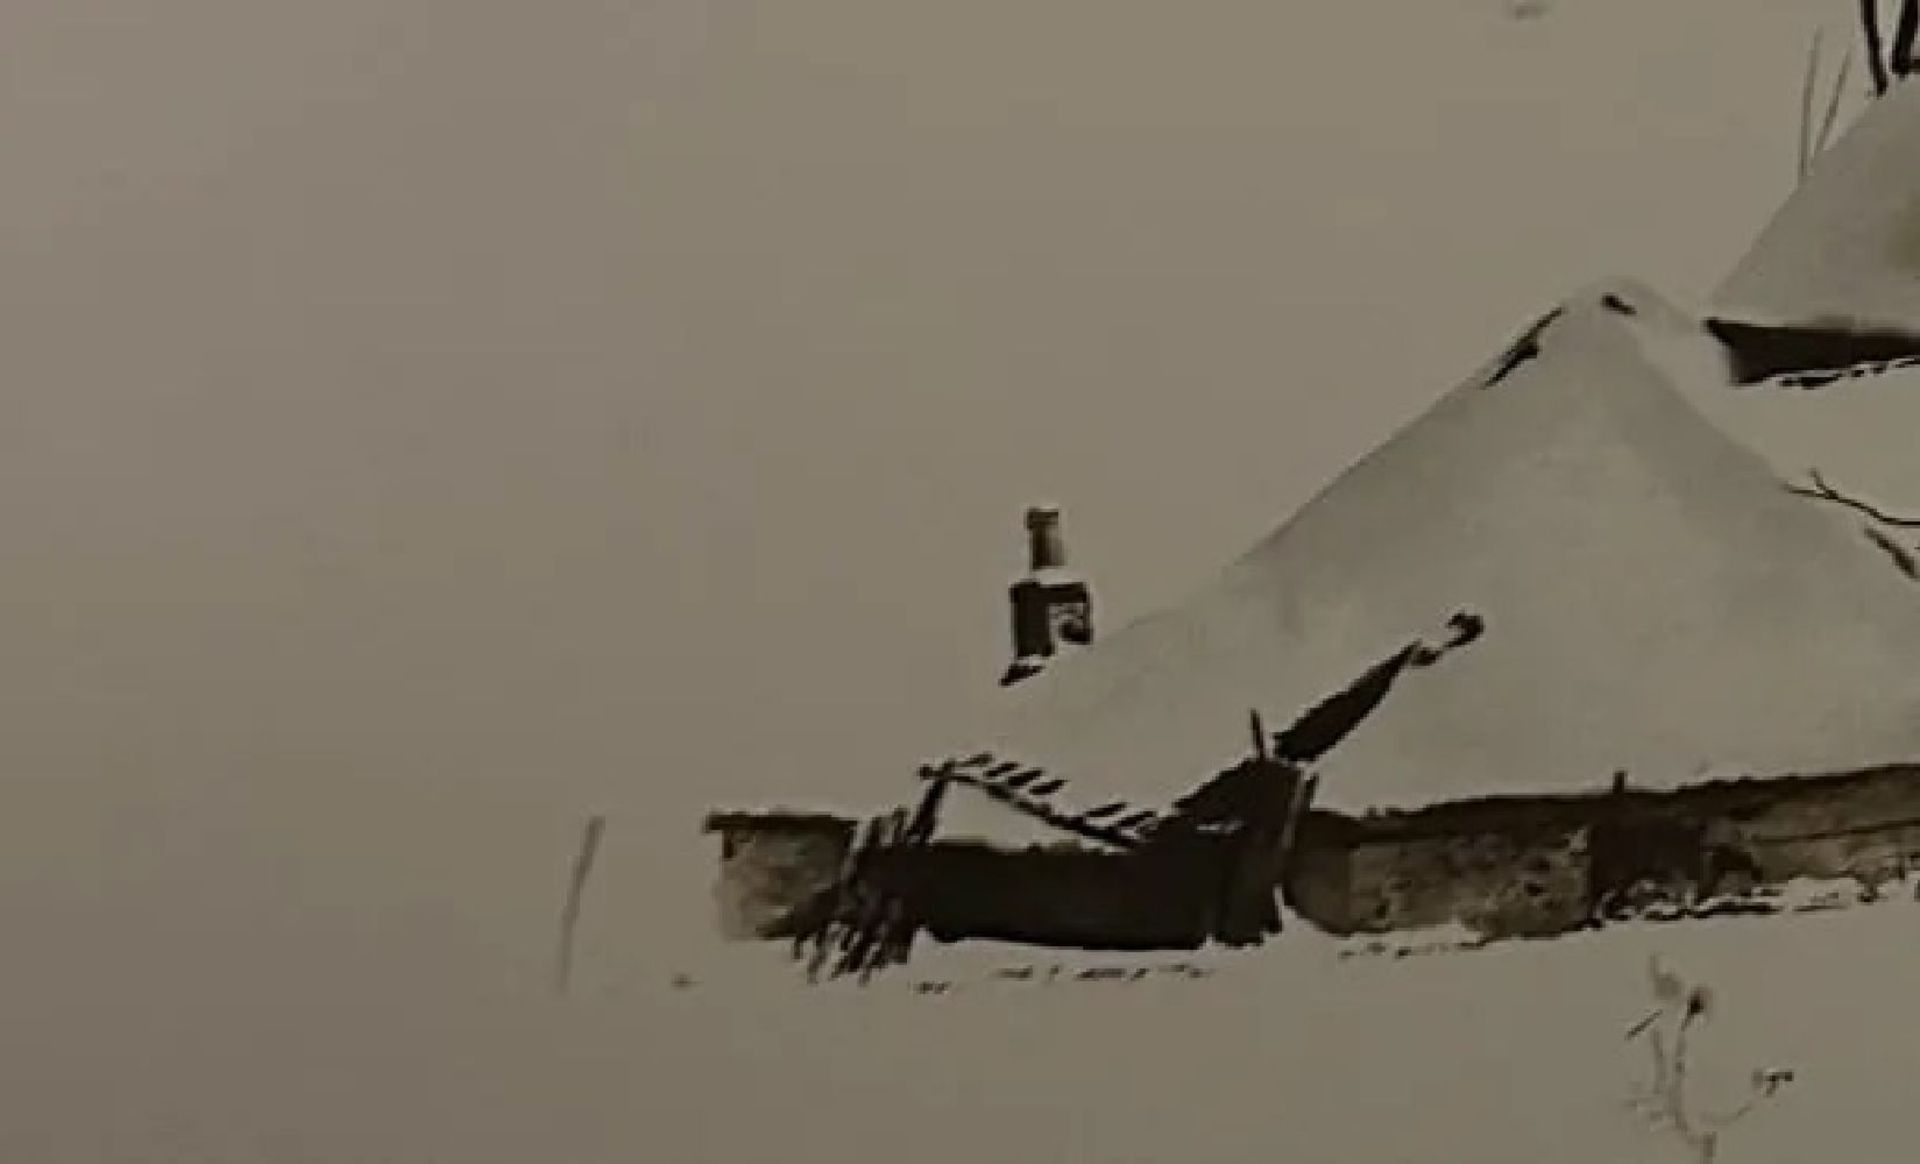 Jamie Wyeth "Untitled" Print - Image 3 of 6